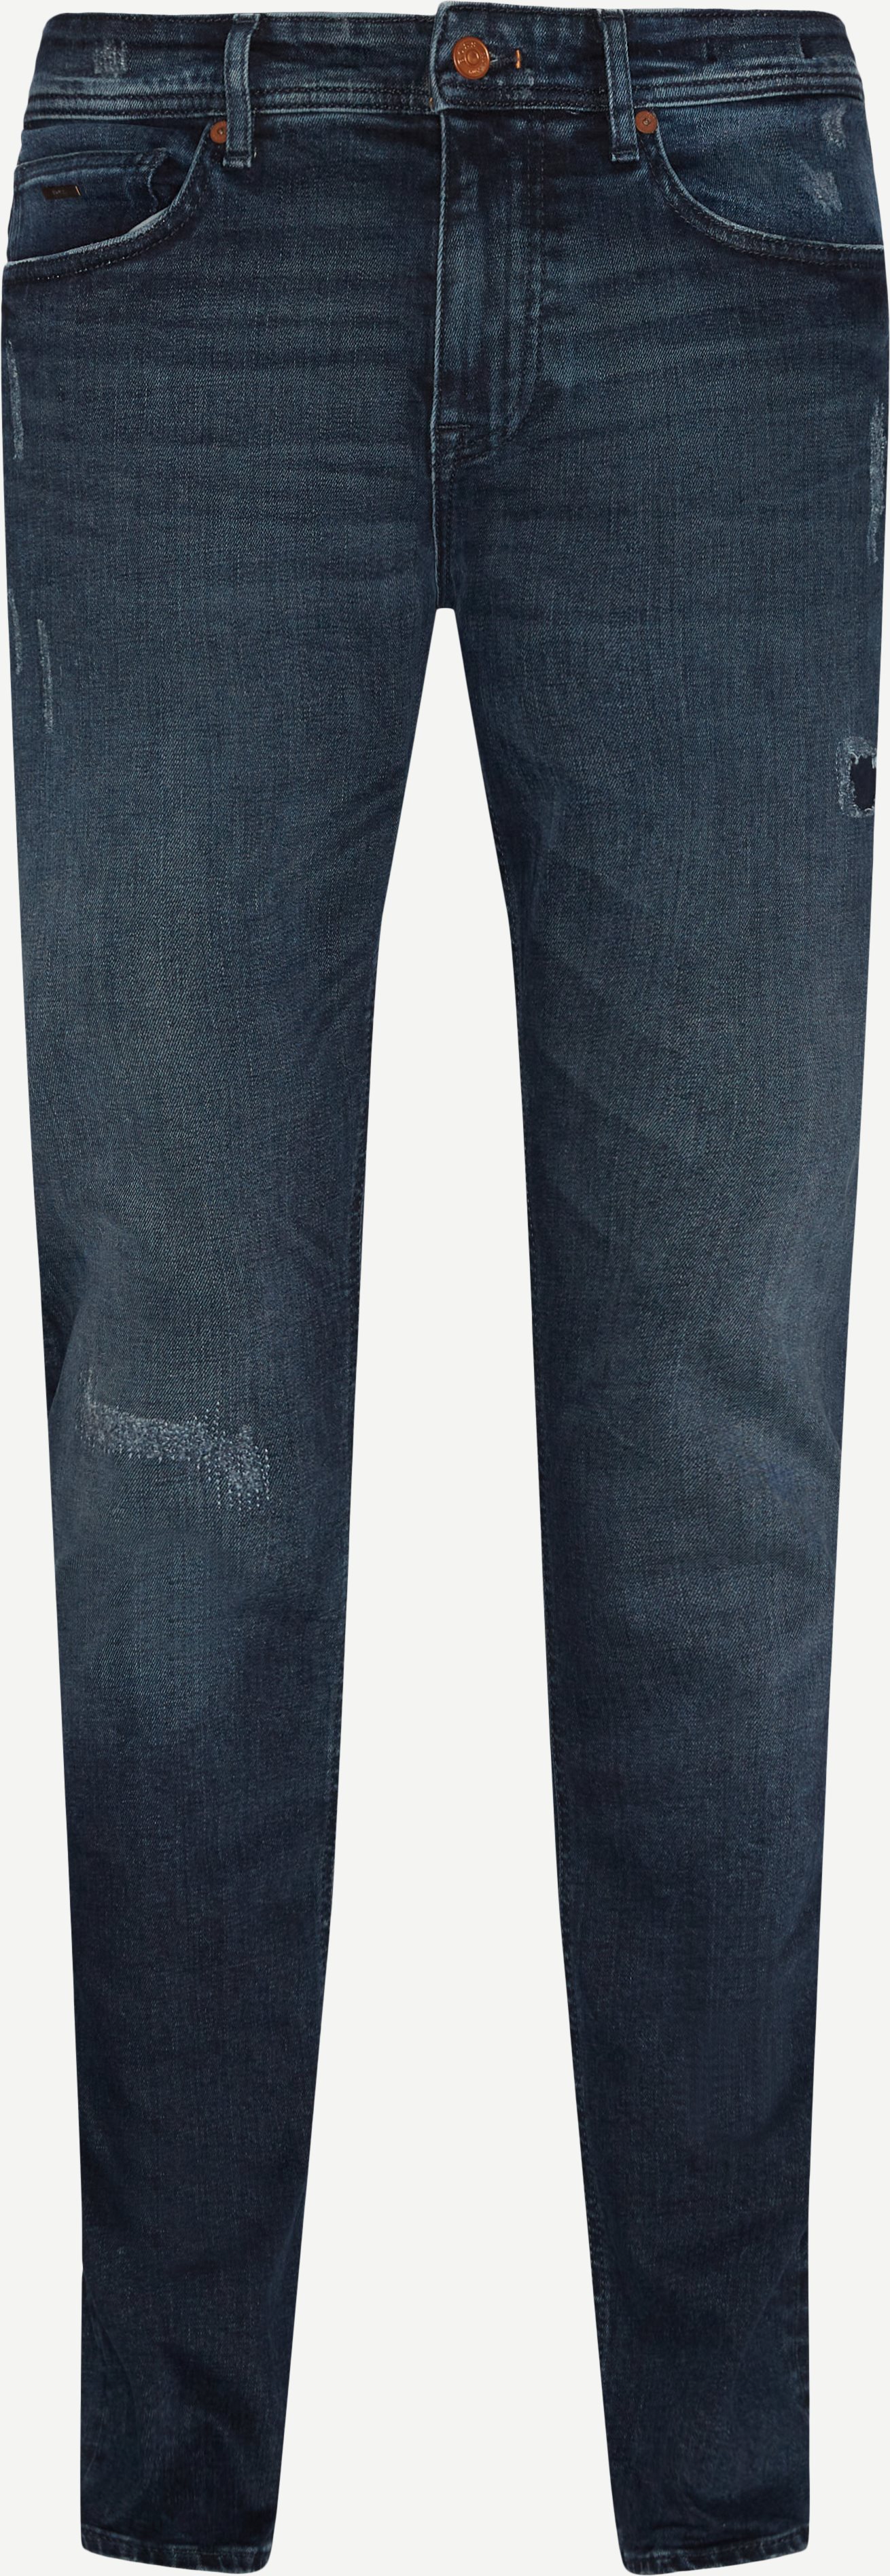 Delaware BC-L-P Humble Jeans - Jeans - Slim fit - Denim